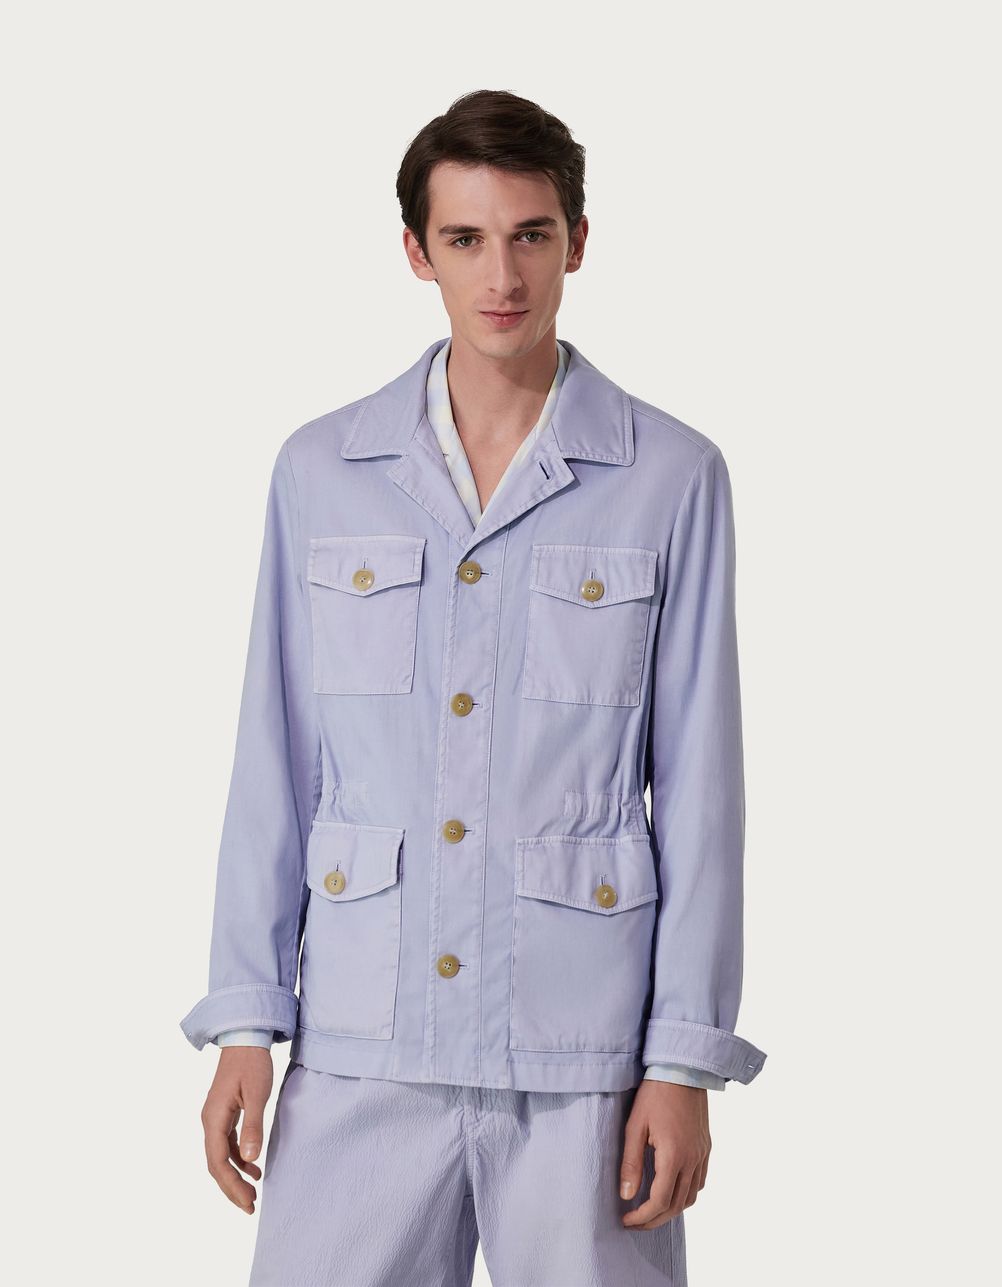 Light blue safari jacket in a garment-dyed stretch cotton blend